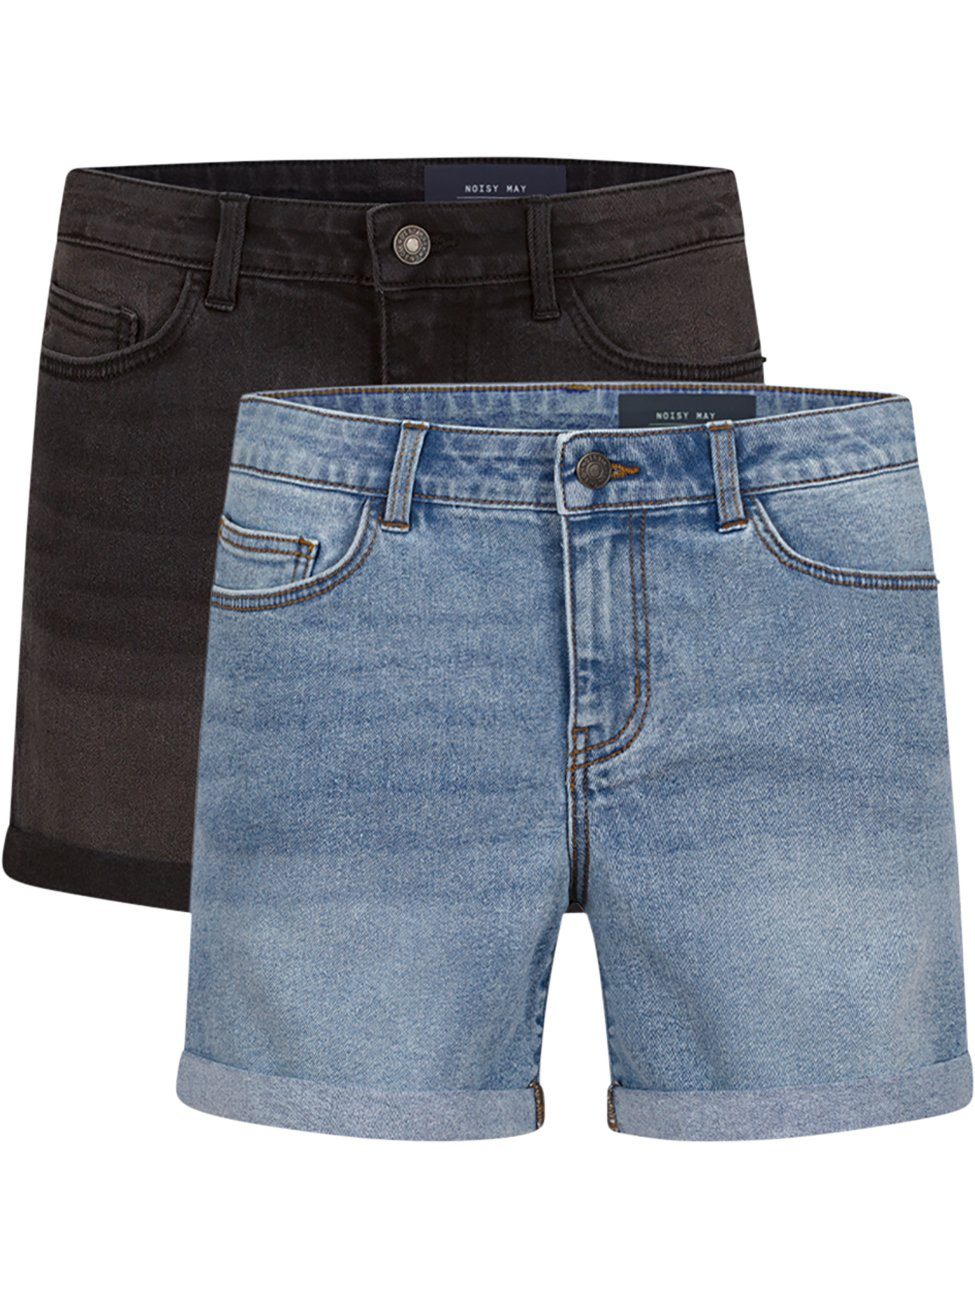 Noisy may Jeansshorts Damen Shorts BeLucky Regular Fit Basic Hotpants mit Stretch Dark Grey & Light Blue (27028348)